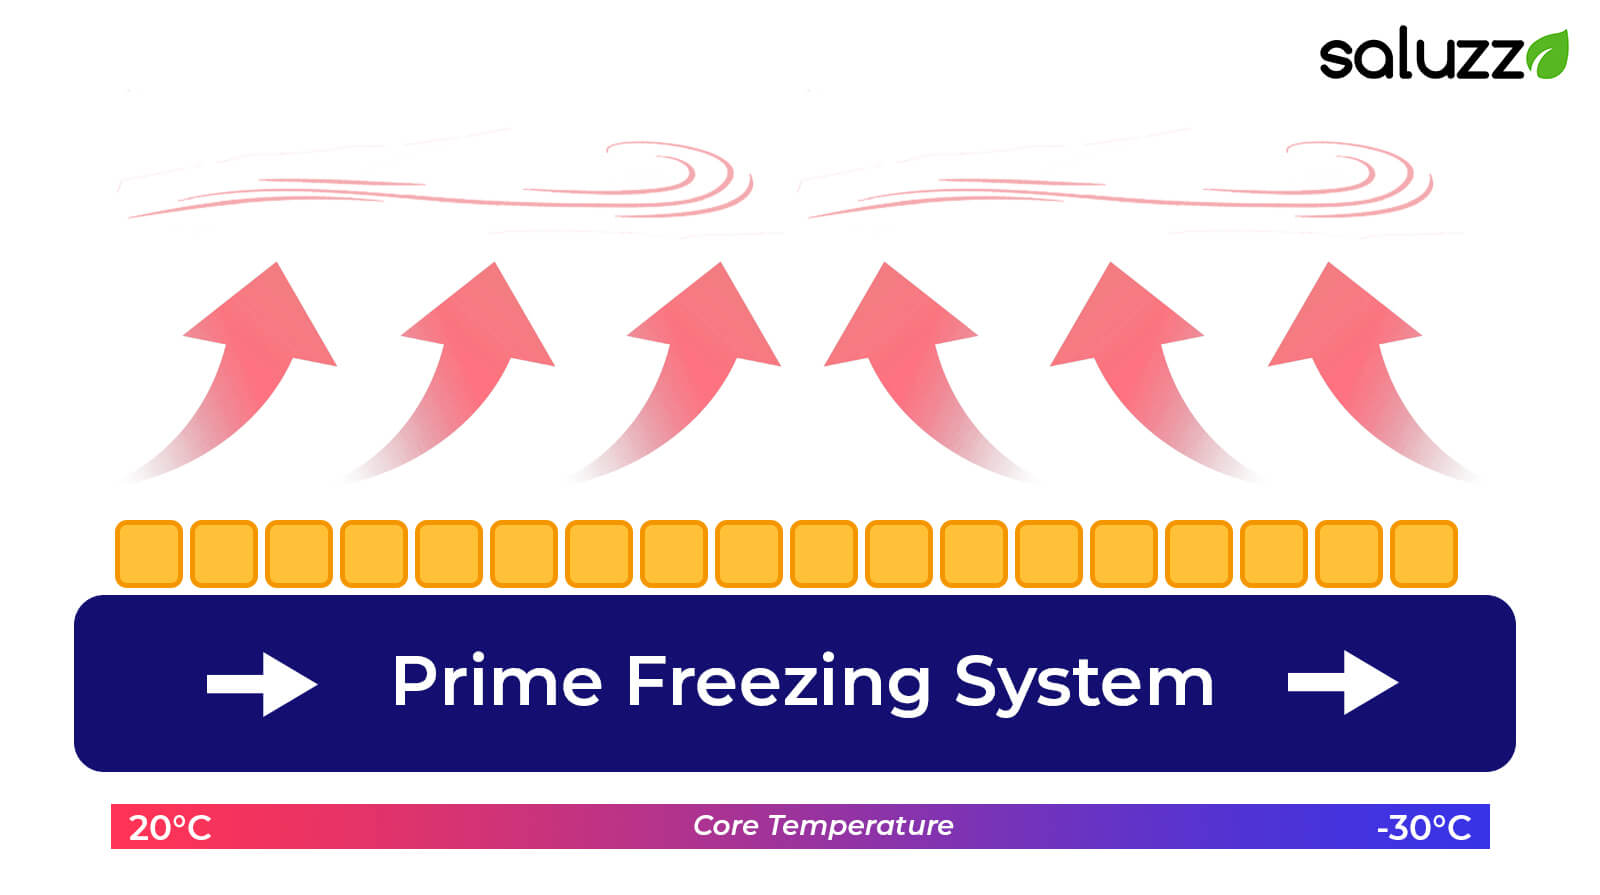 prime freezing system costa rica saluzzo